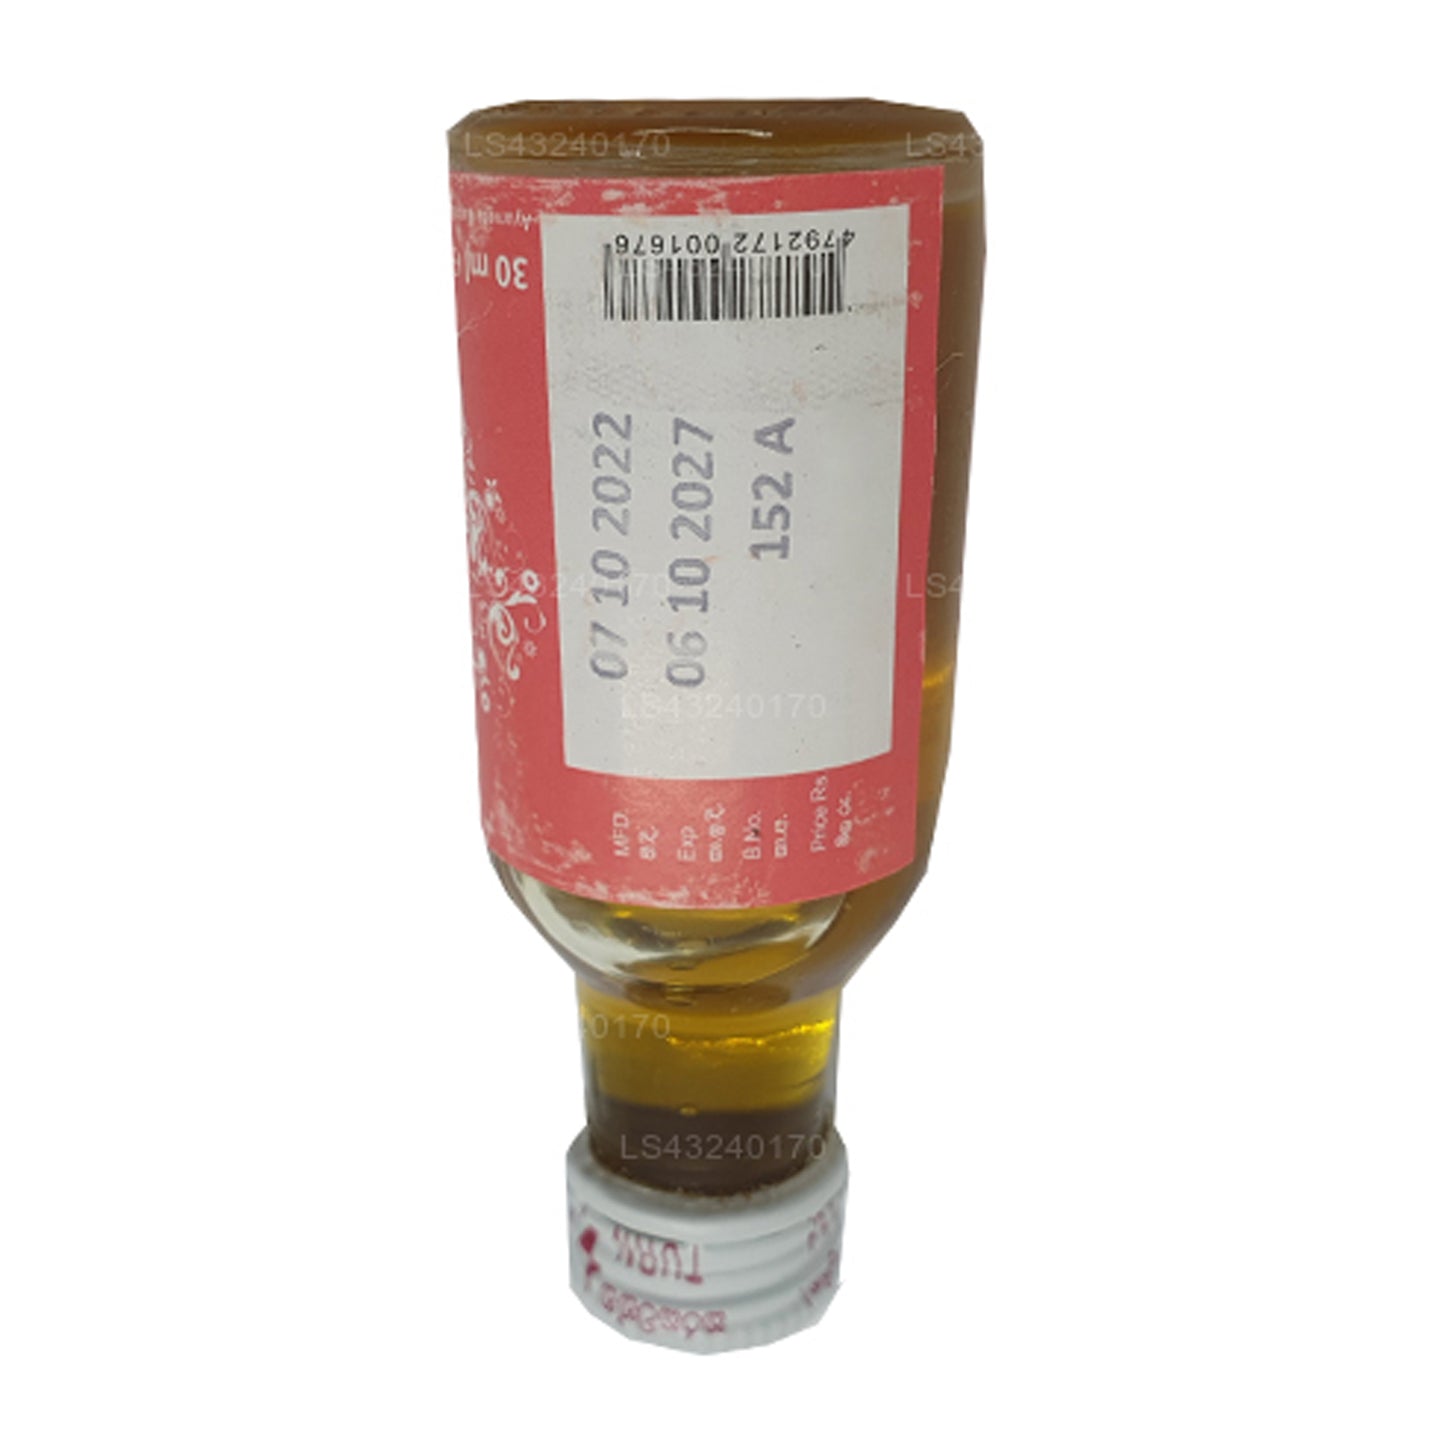 Siddhalepa Sarshapadi olja (30 ml)